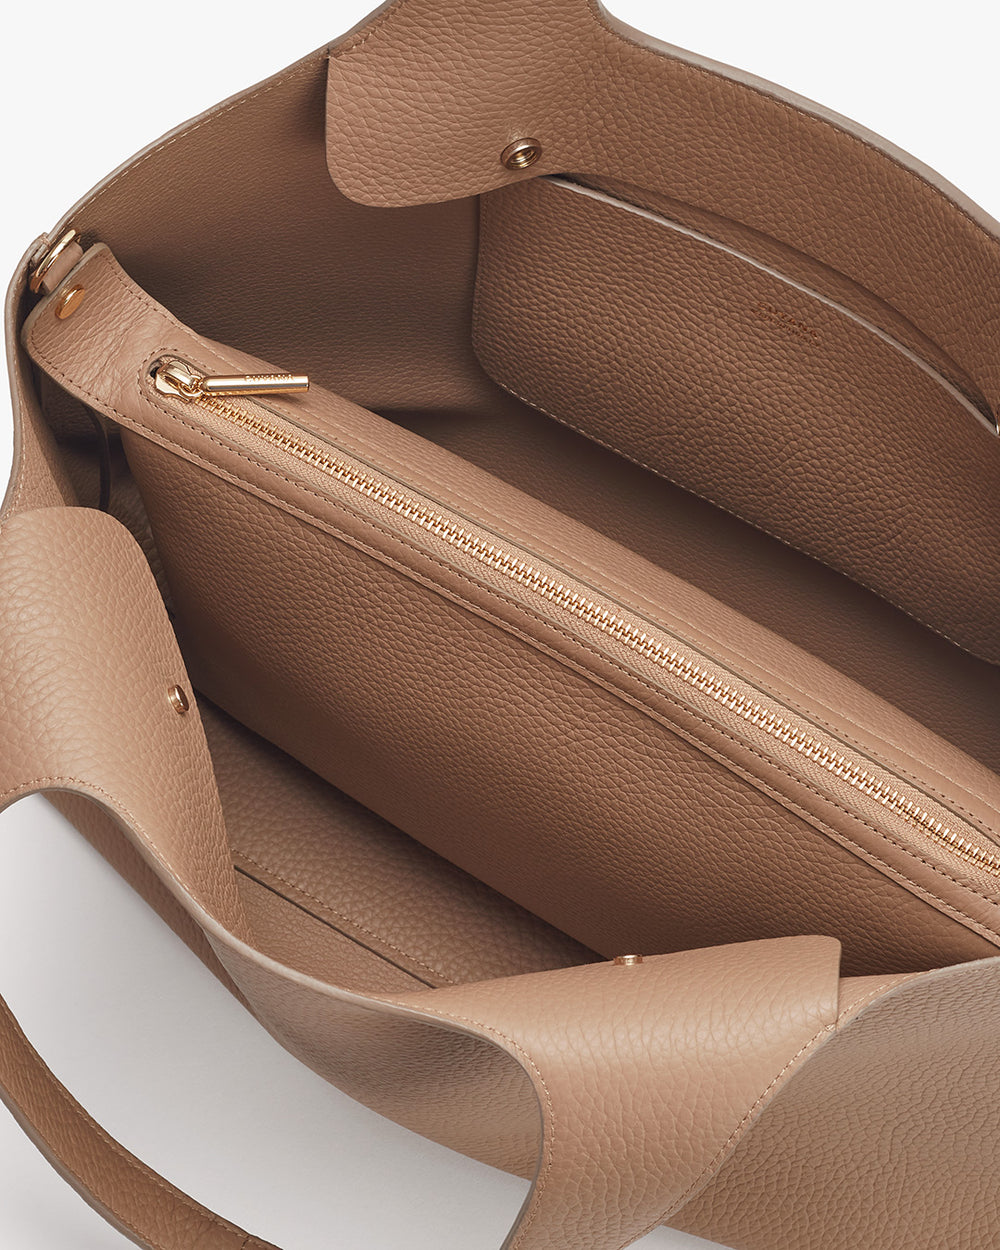 Open handbag showing interior with zippers.